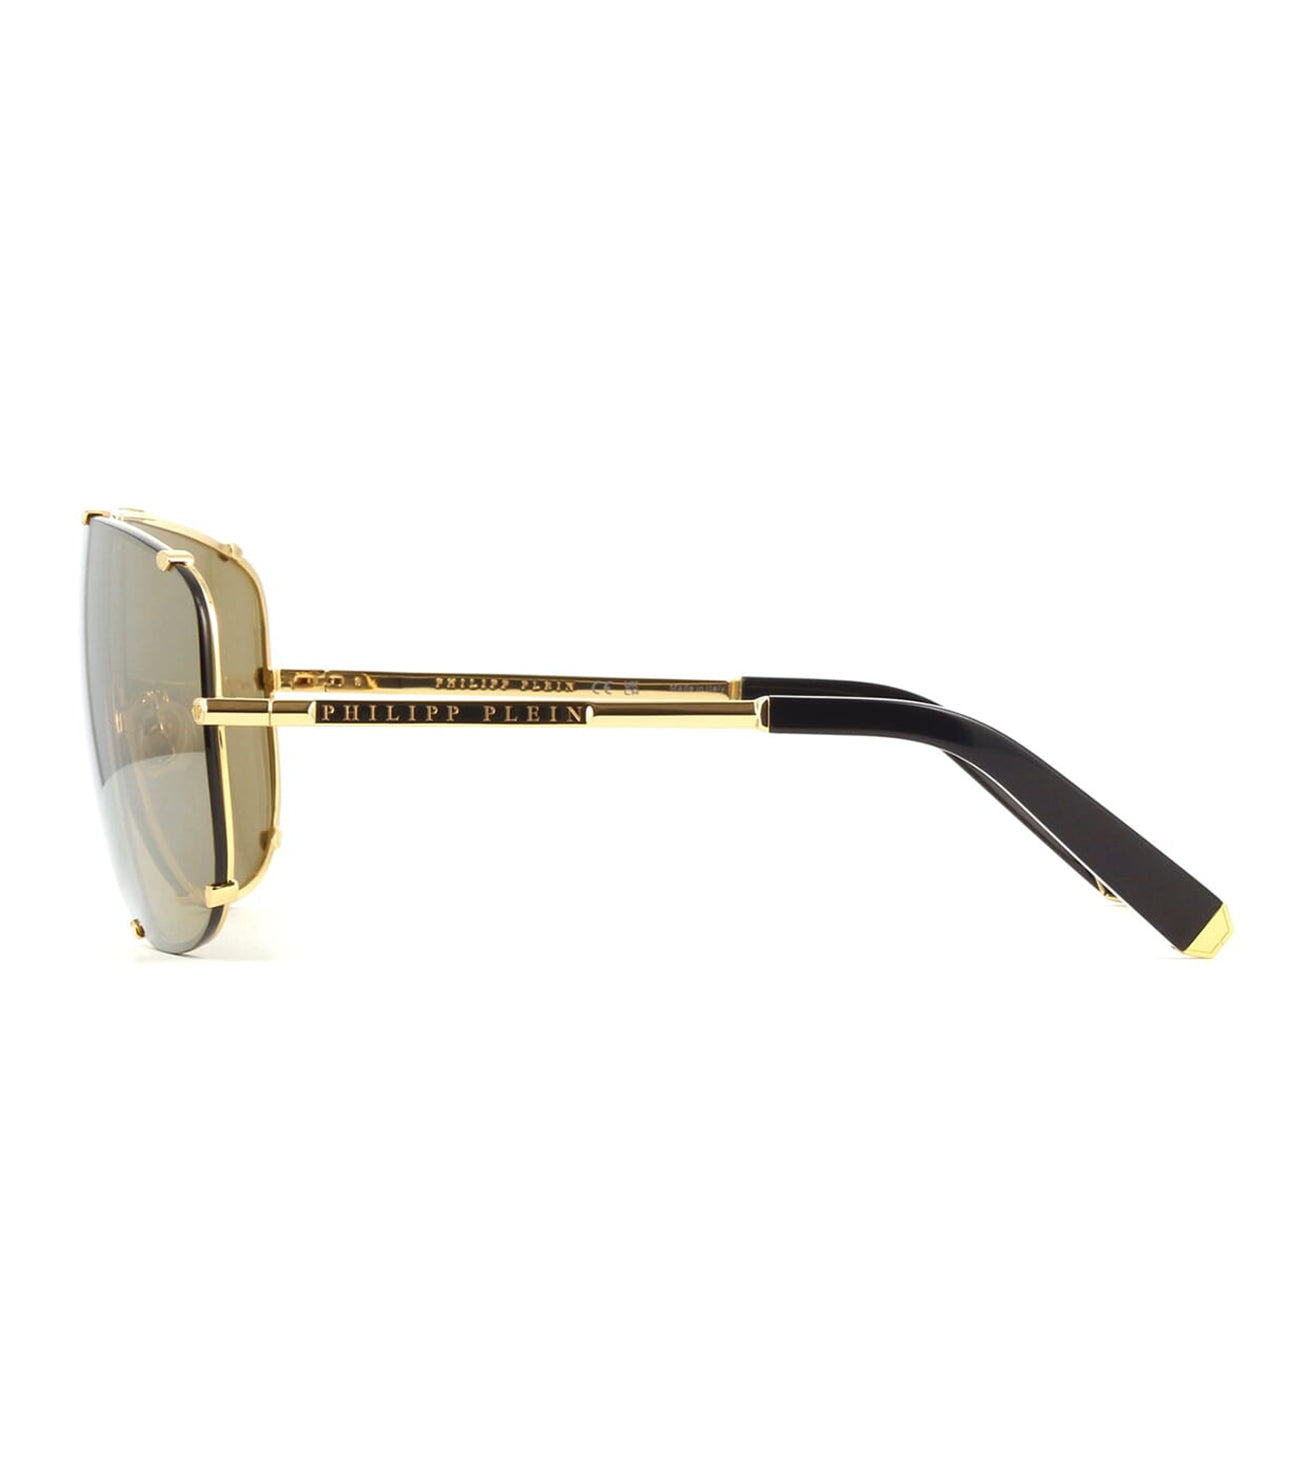 Philipp Plein Men's Gold-mirrored Aviator Sunglasses